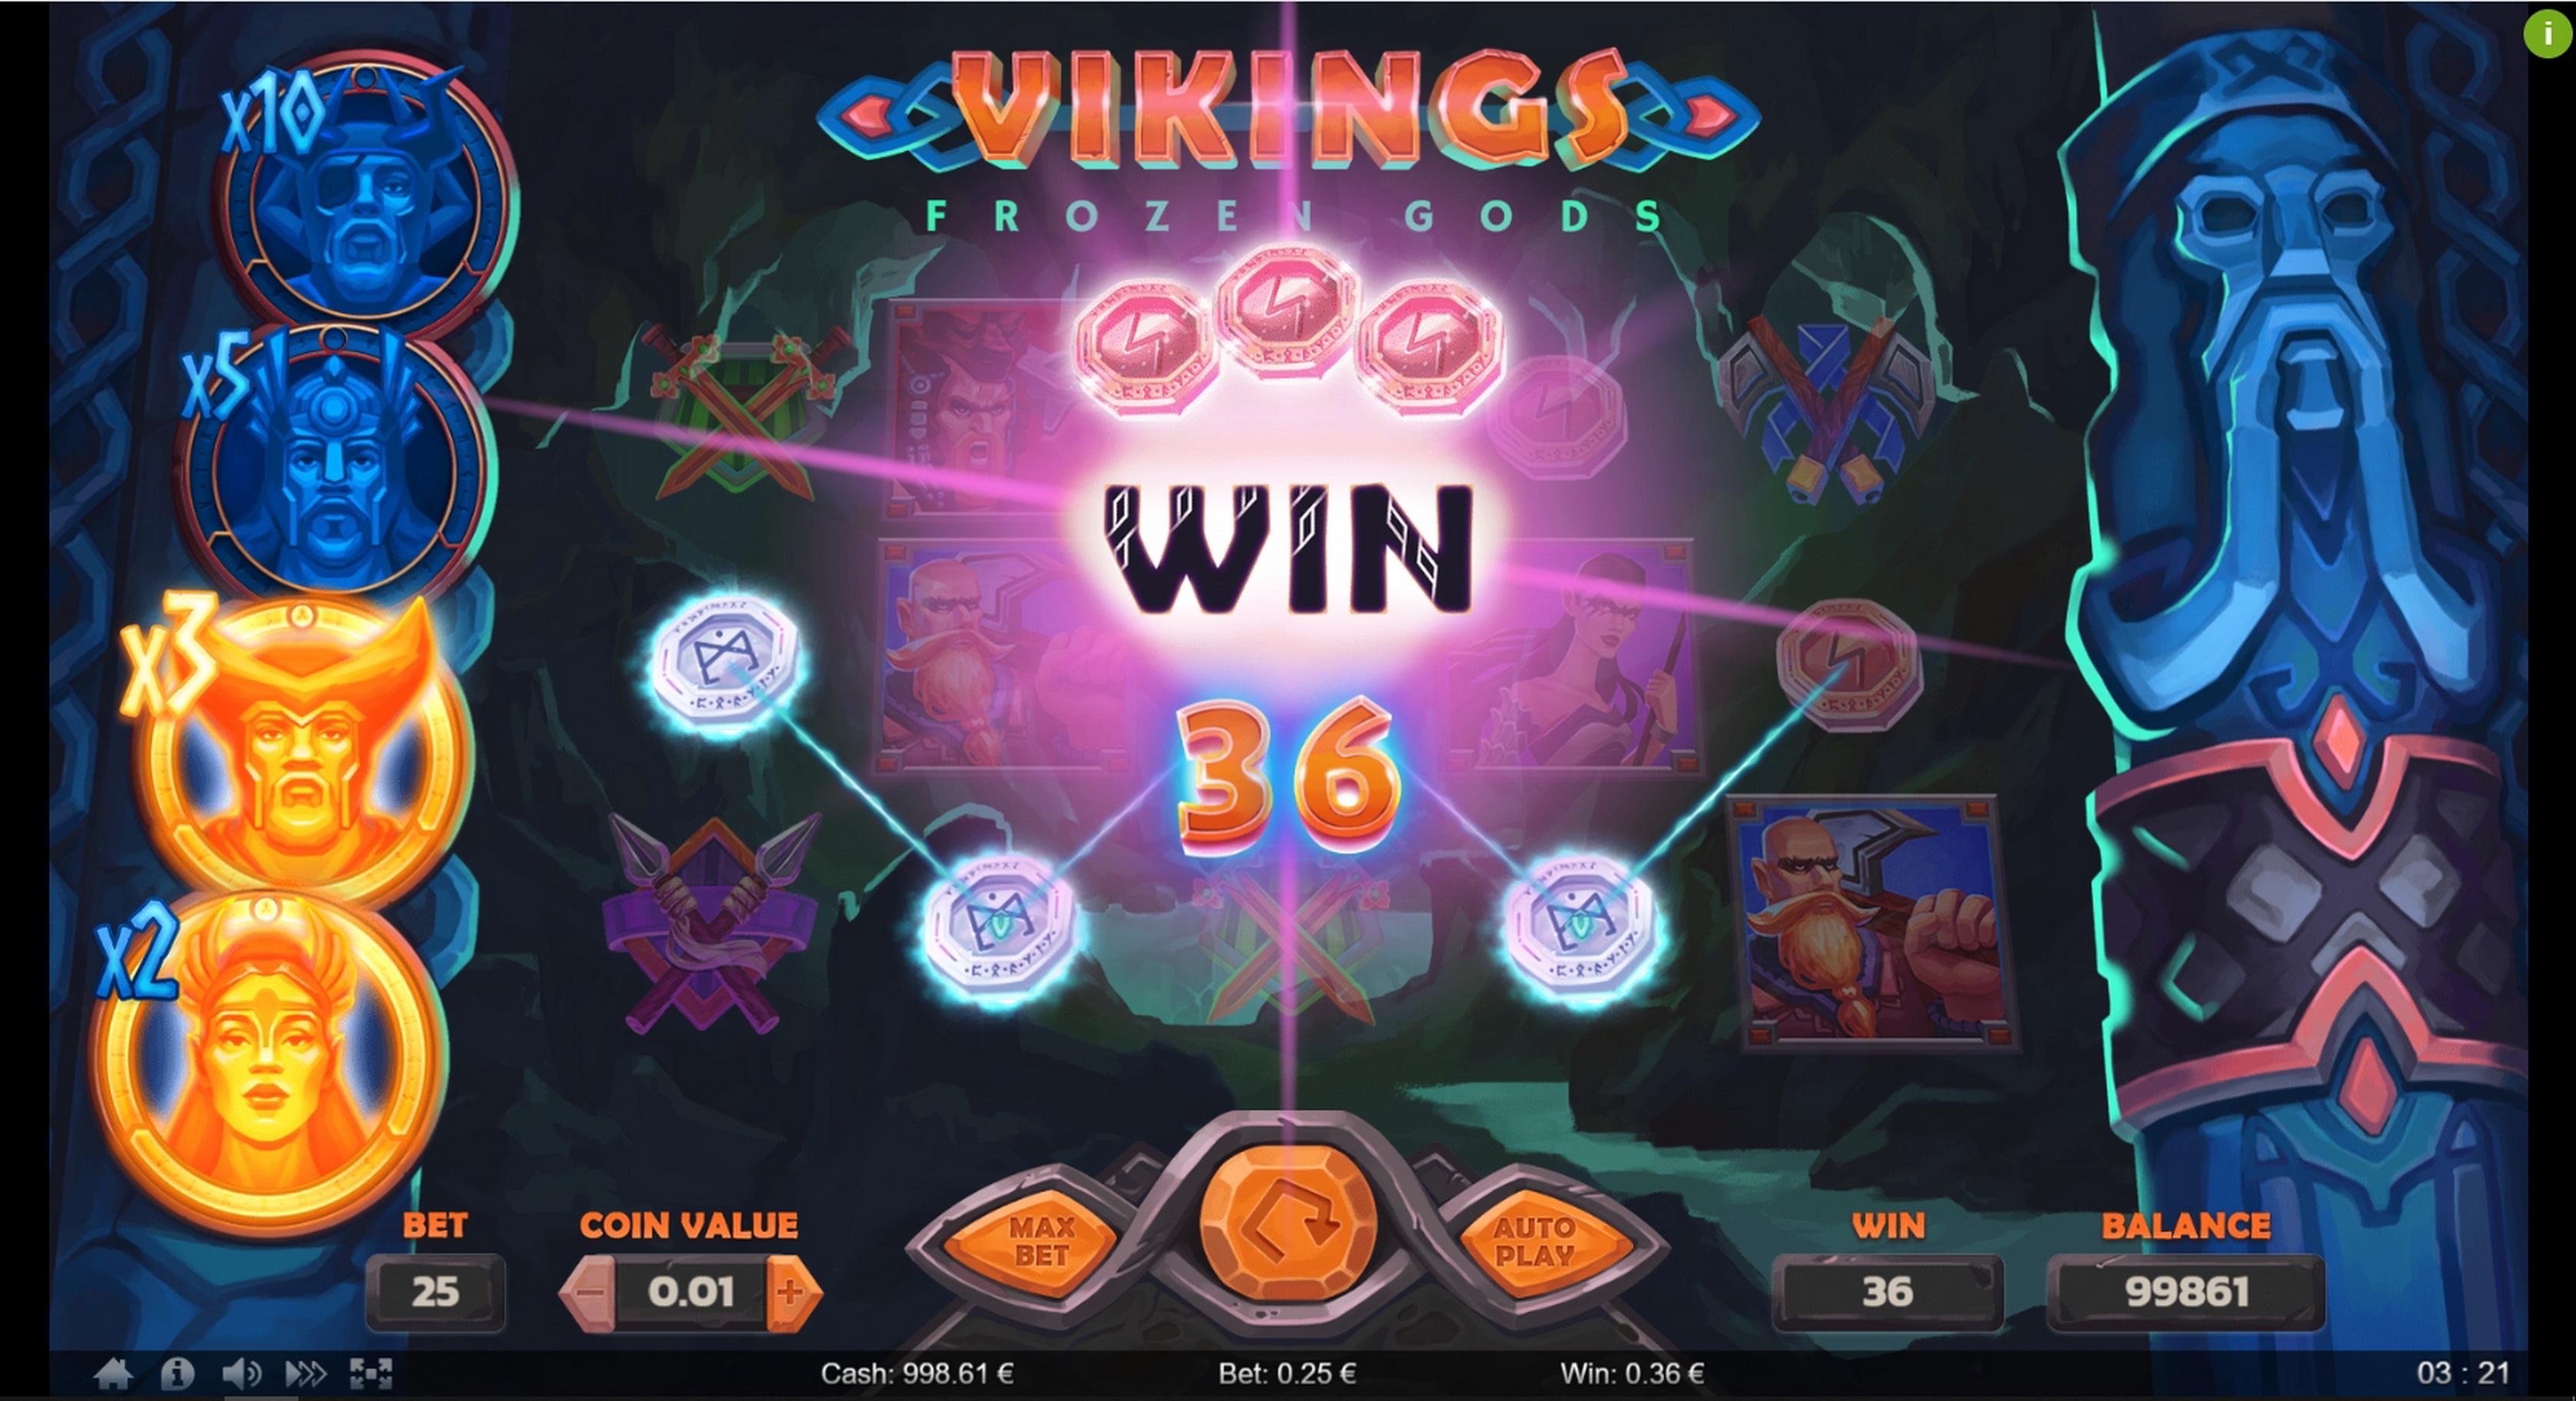 Win Money in Vikings Frozen Gods Free Slot Game by Thunderspin